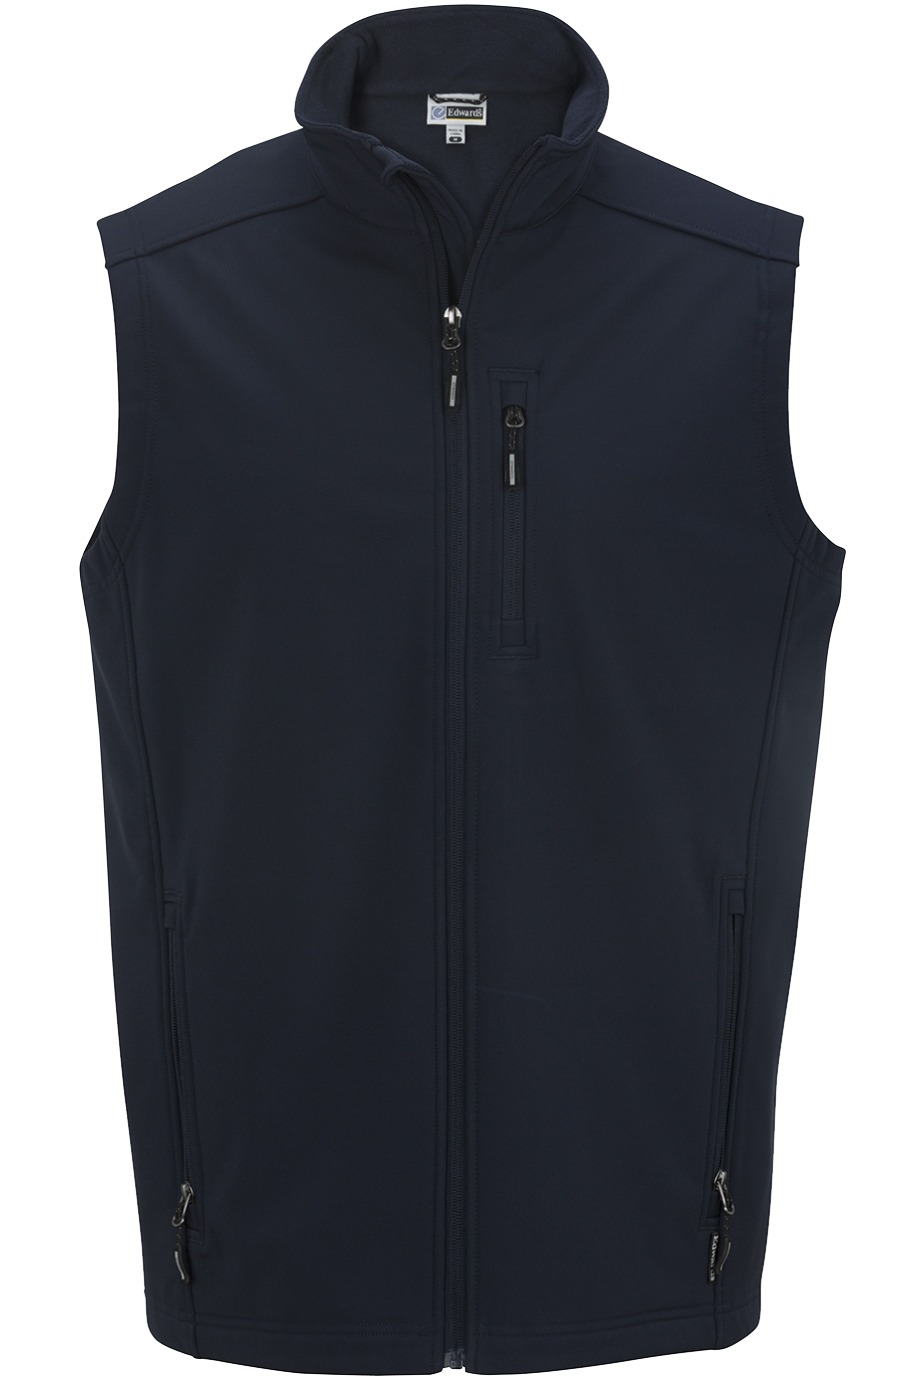 Edwards Garment 3425 - Men's Soft Shell Vest